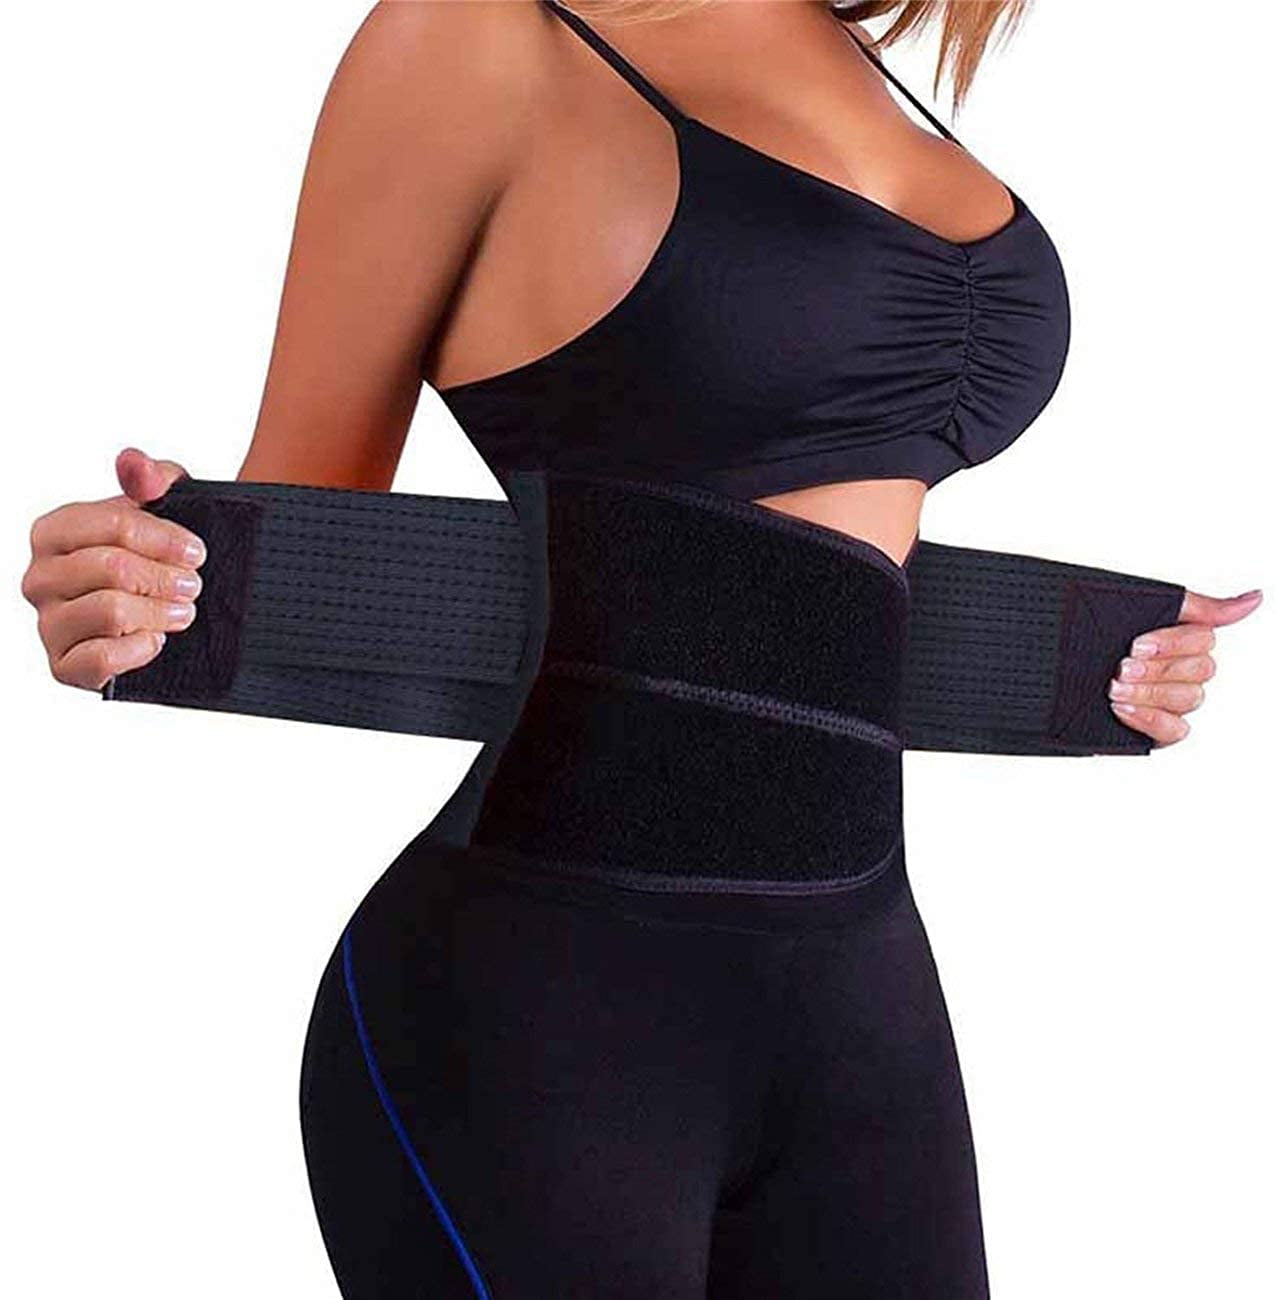 KEEPTO Waist Trainer for Women and Men Sweat Band Tummy Control Waist Cincher Trimmer Belt for Weight Loss 